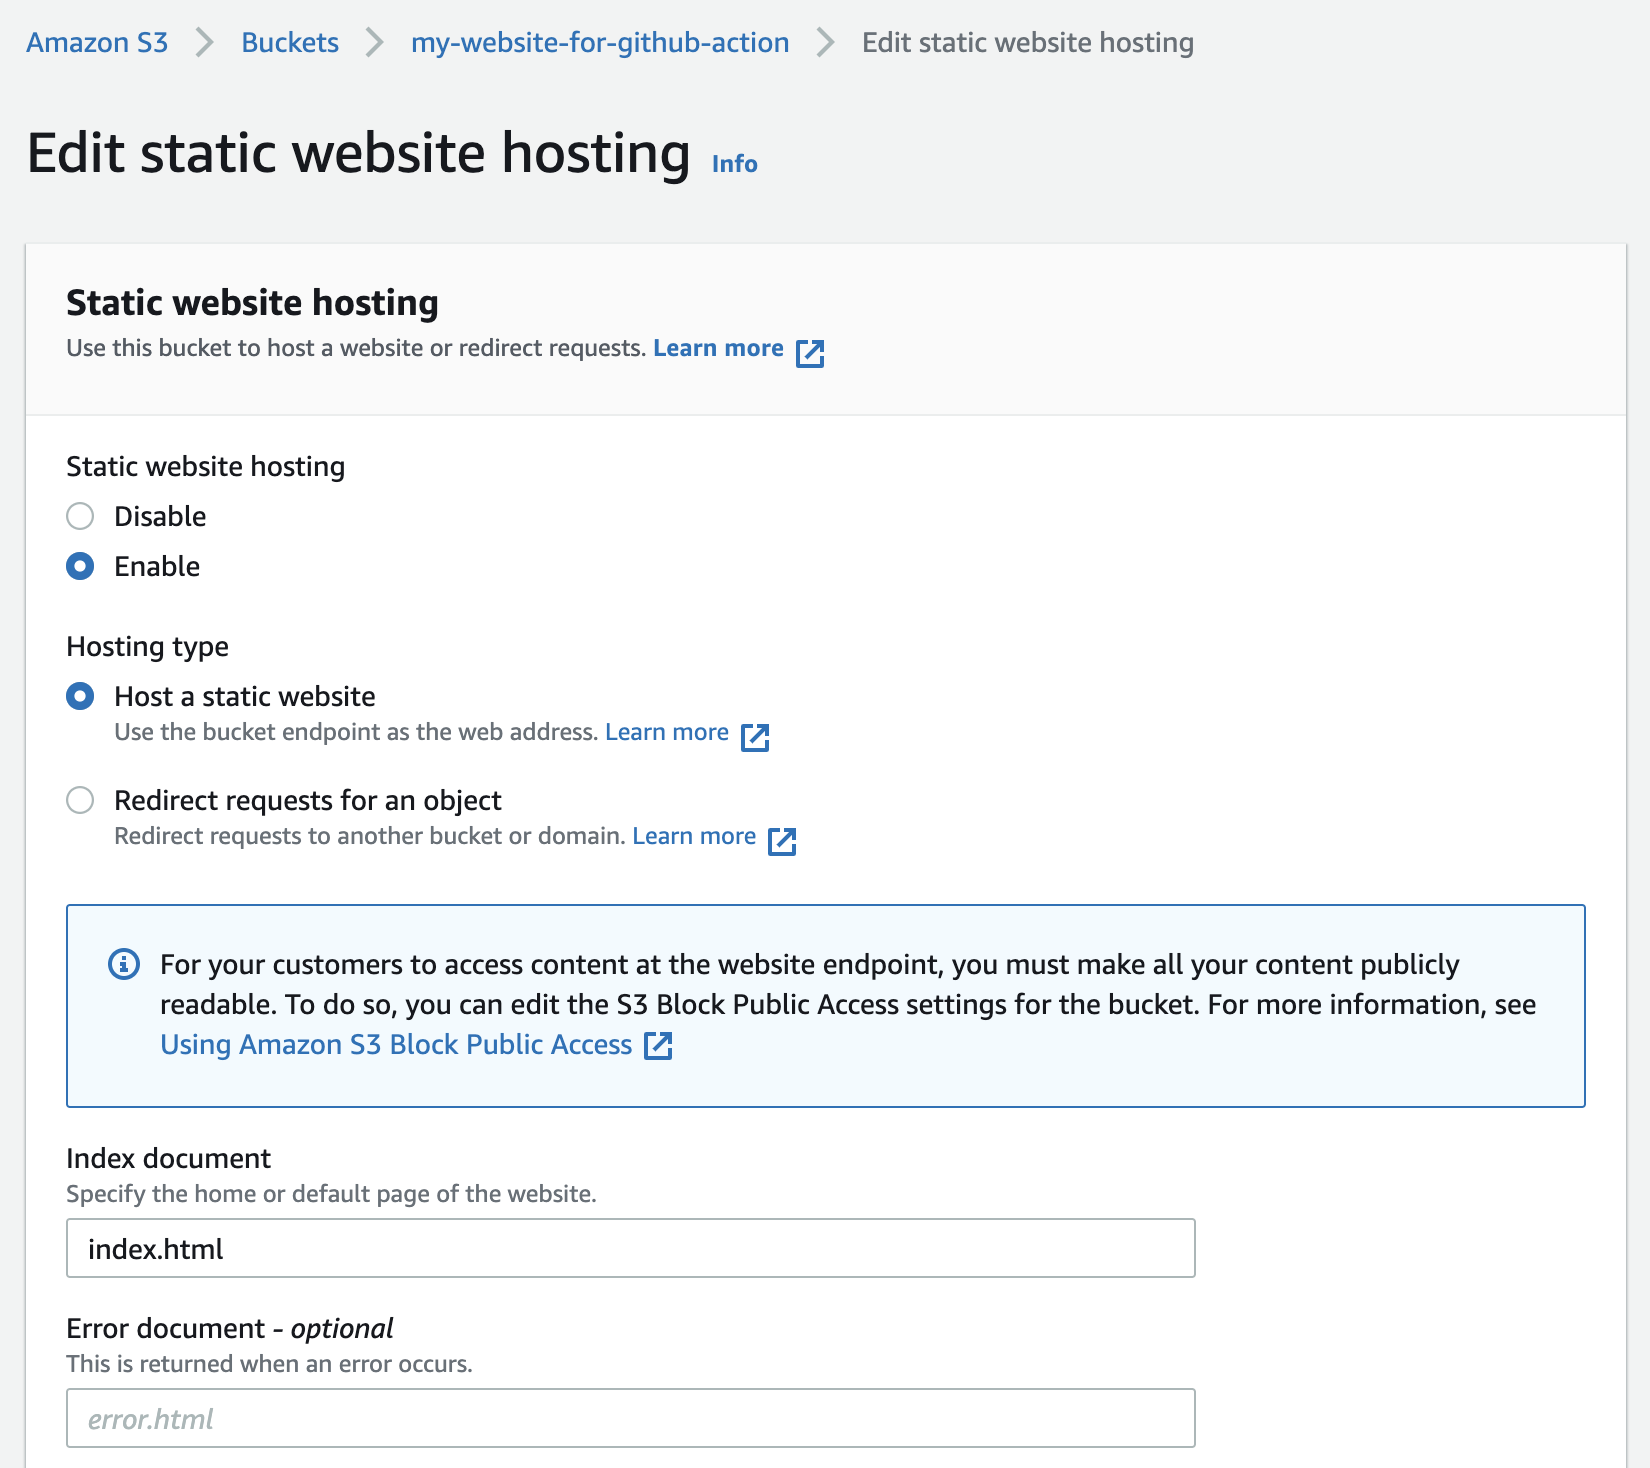 Configure Static website hosting